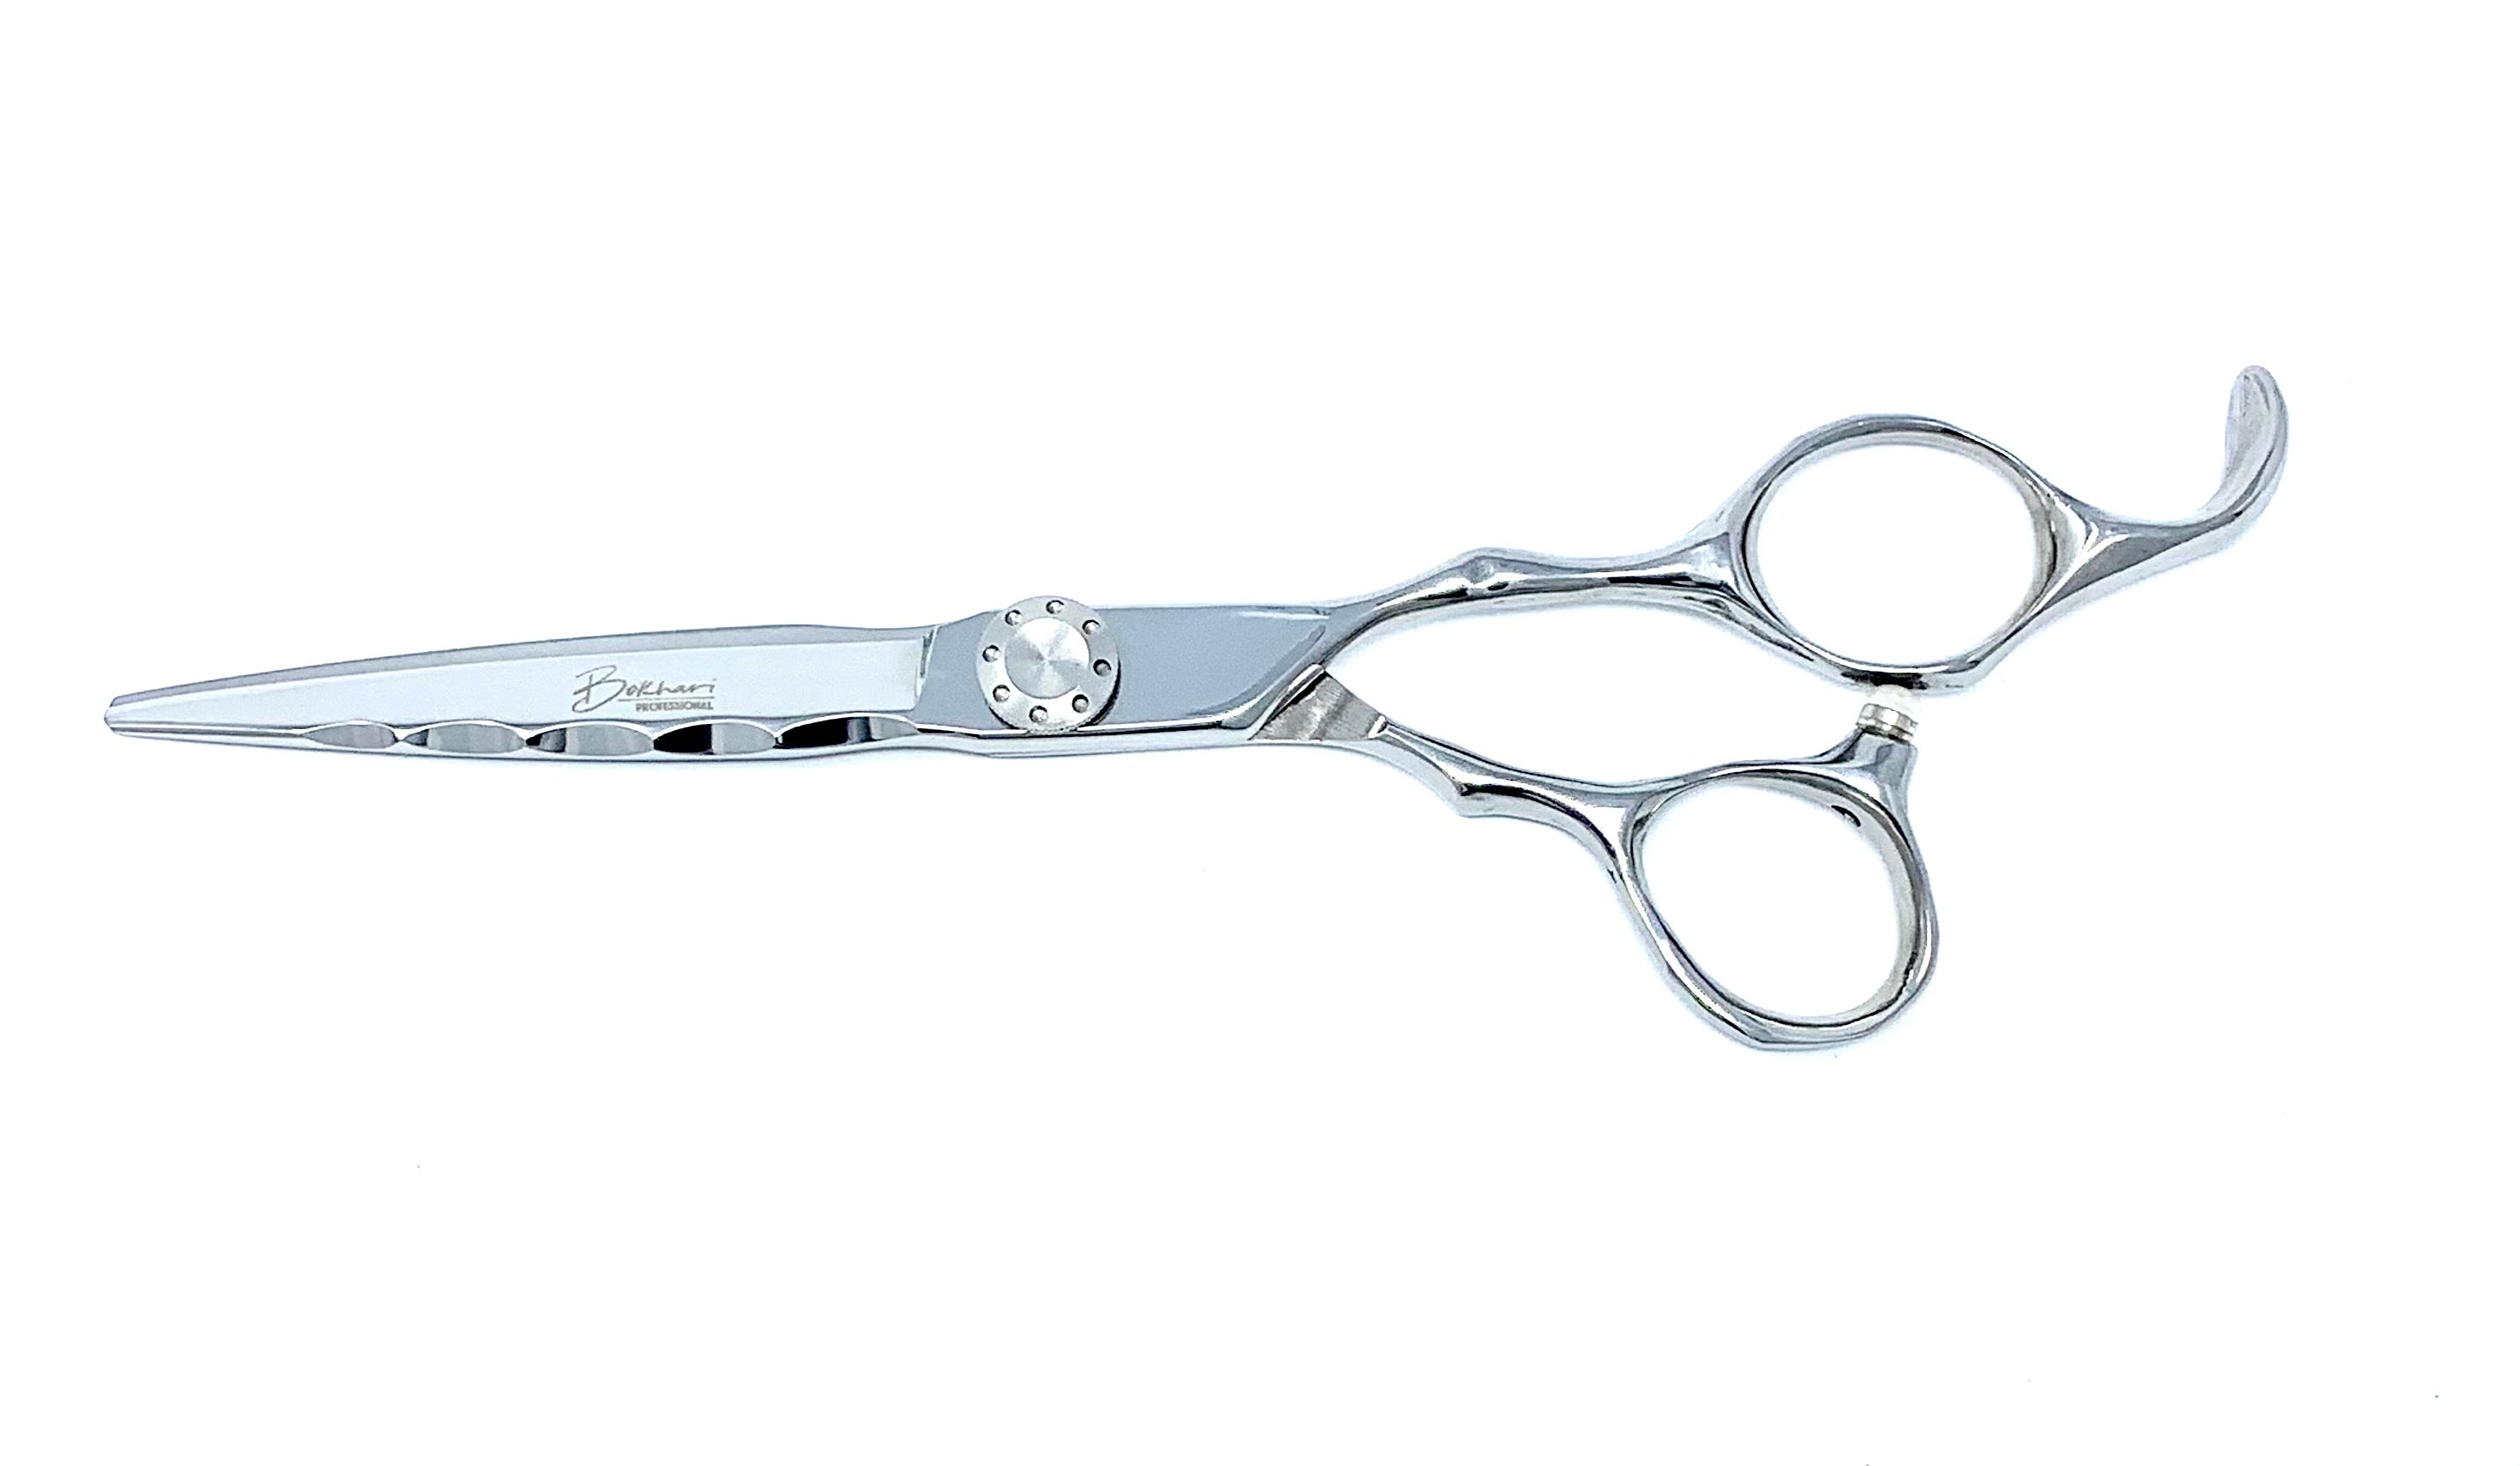 Kore Freeform Cobalt Steel Shear Scissors - 5.5